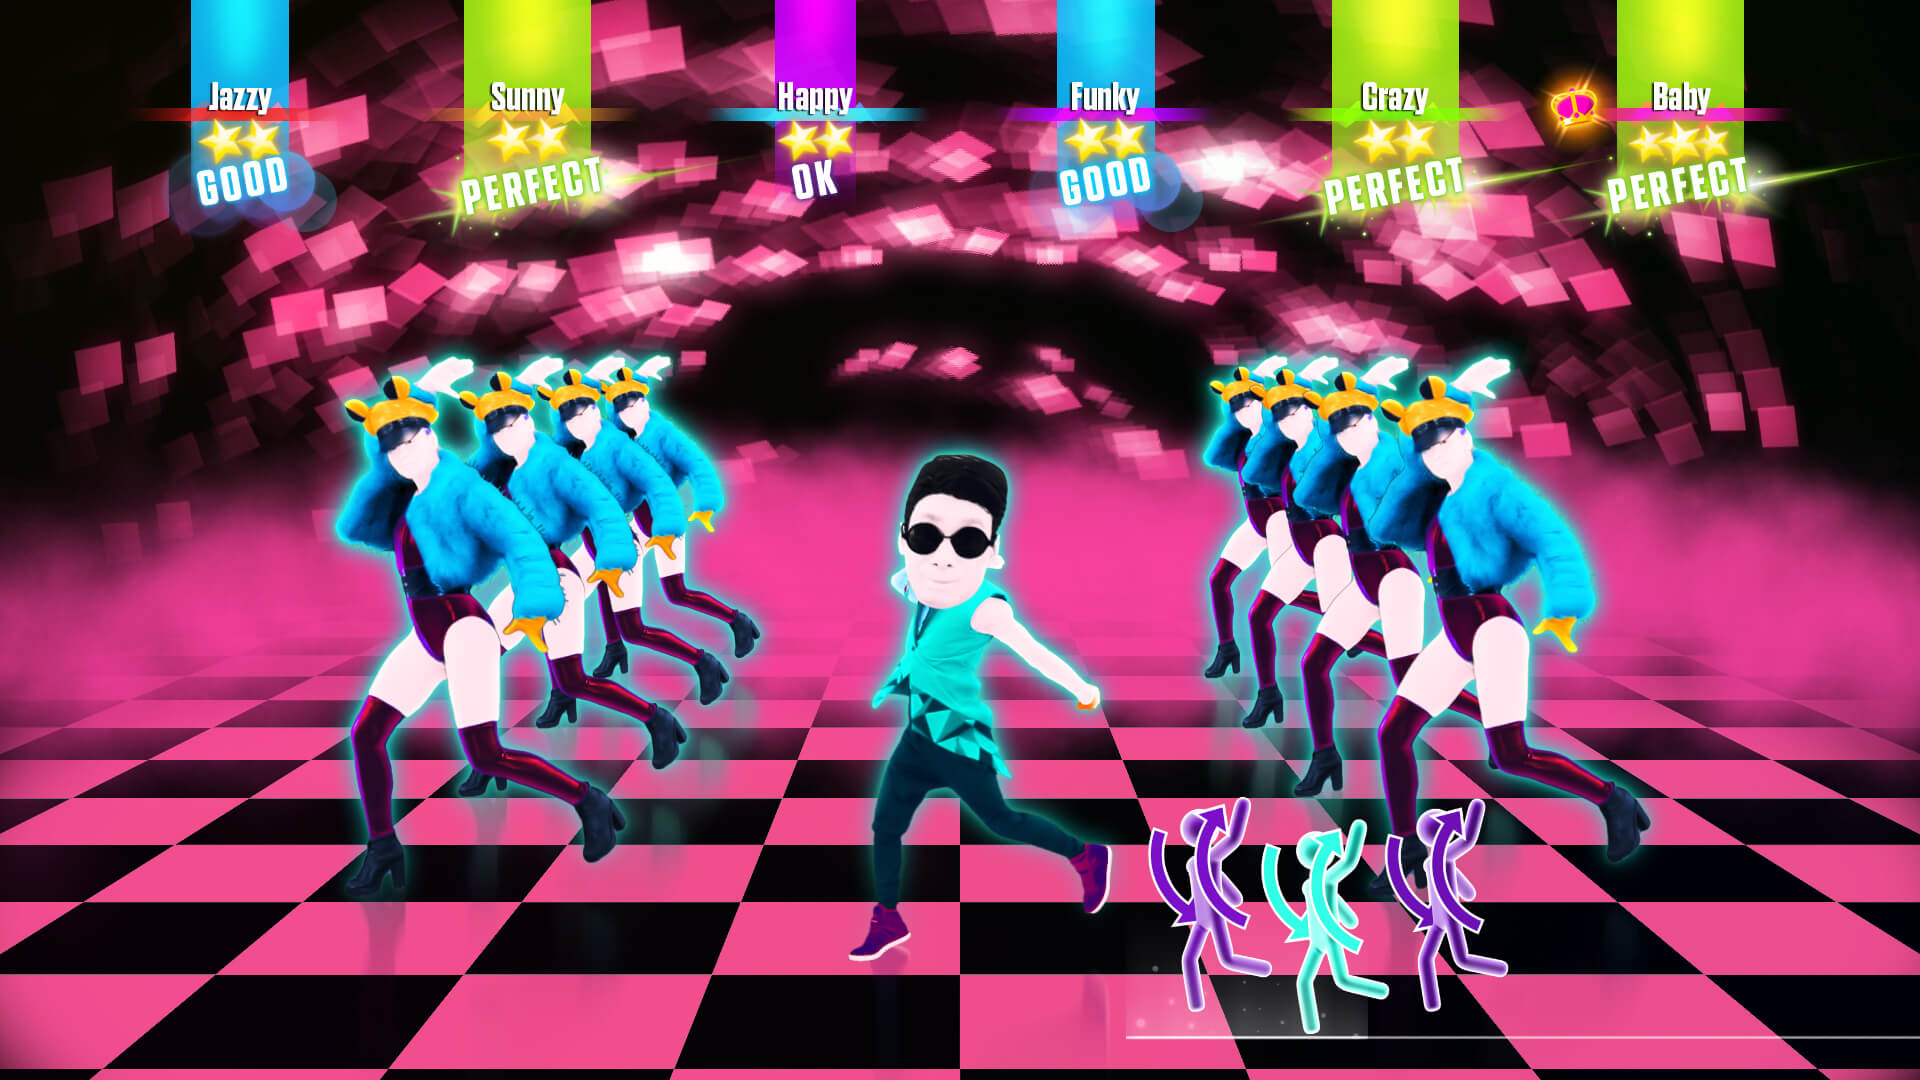 Игра танцы новый. Just Dance just Dance (игра). Игра детей в Джаст дэнс. Xbox one just Dance 2017 для Kinect 2.0. Just Dance 2017 Xbox 360.